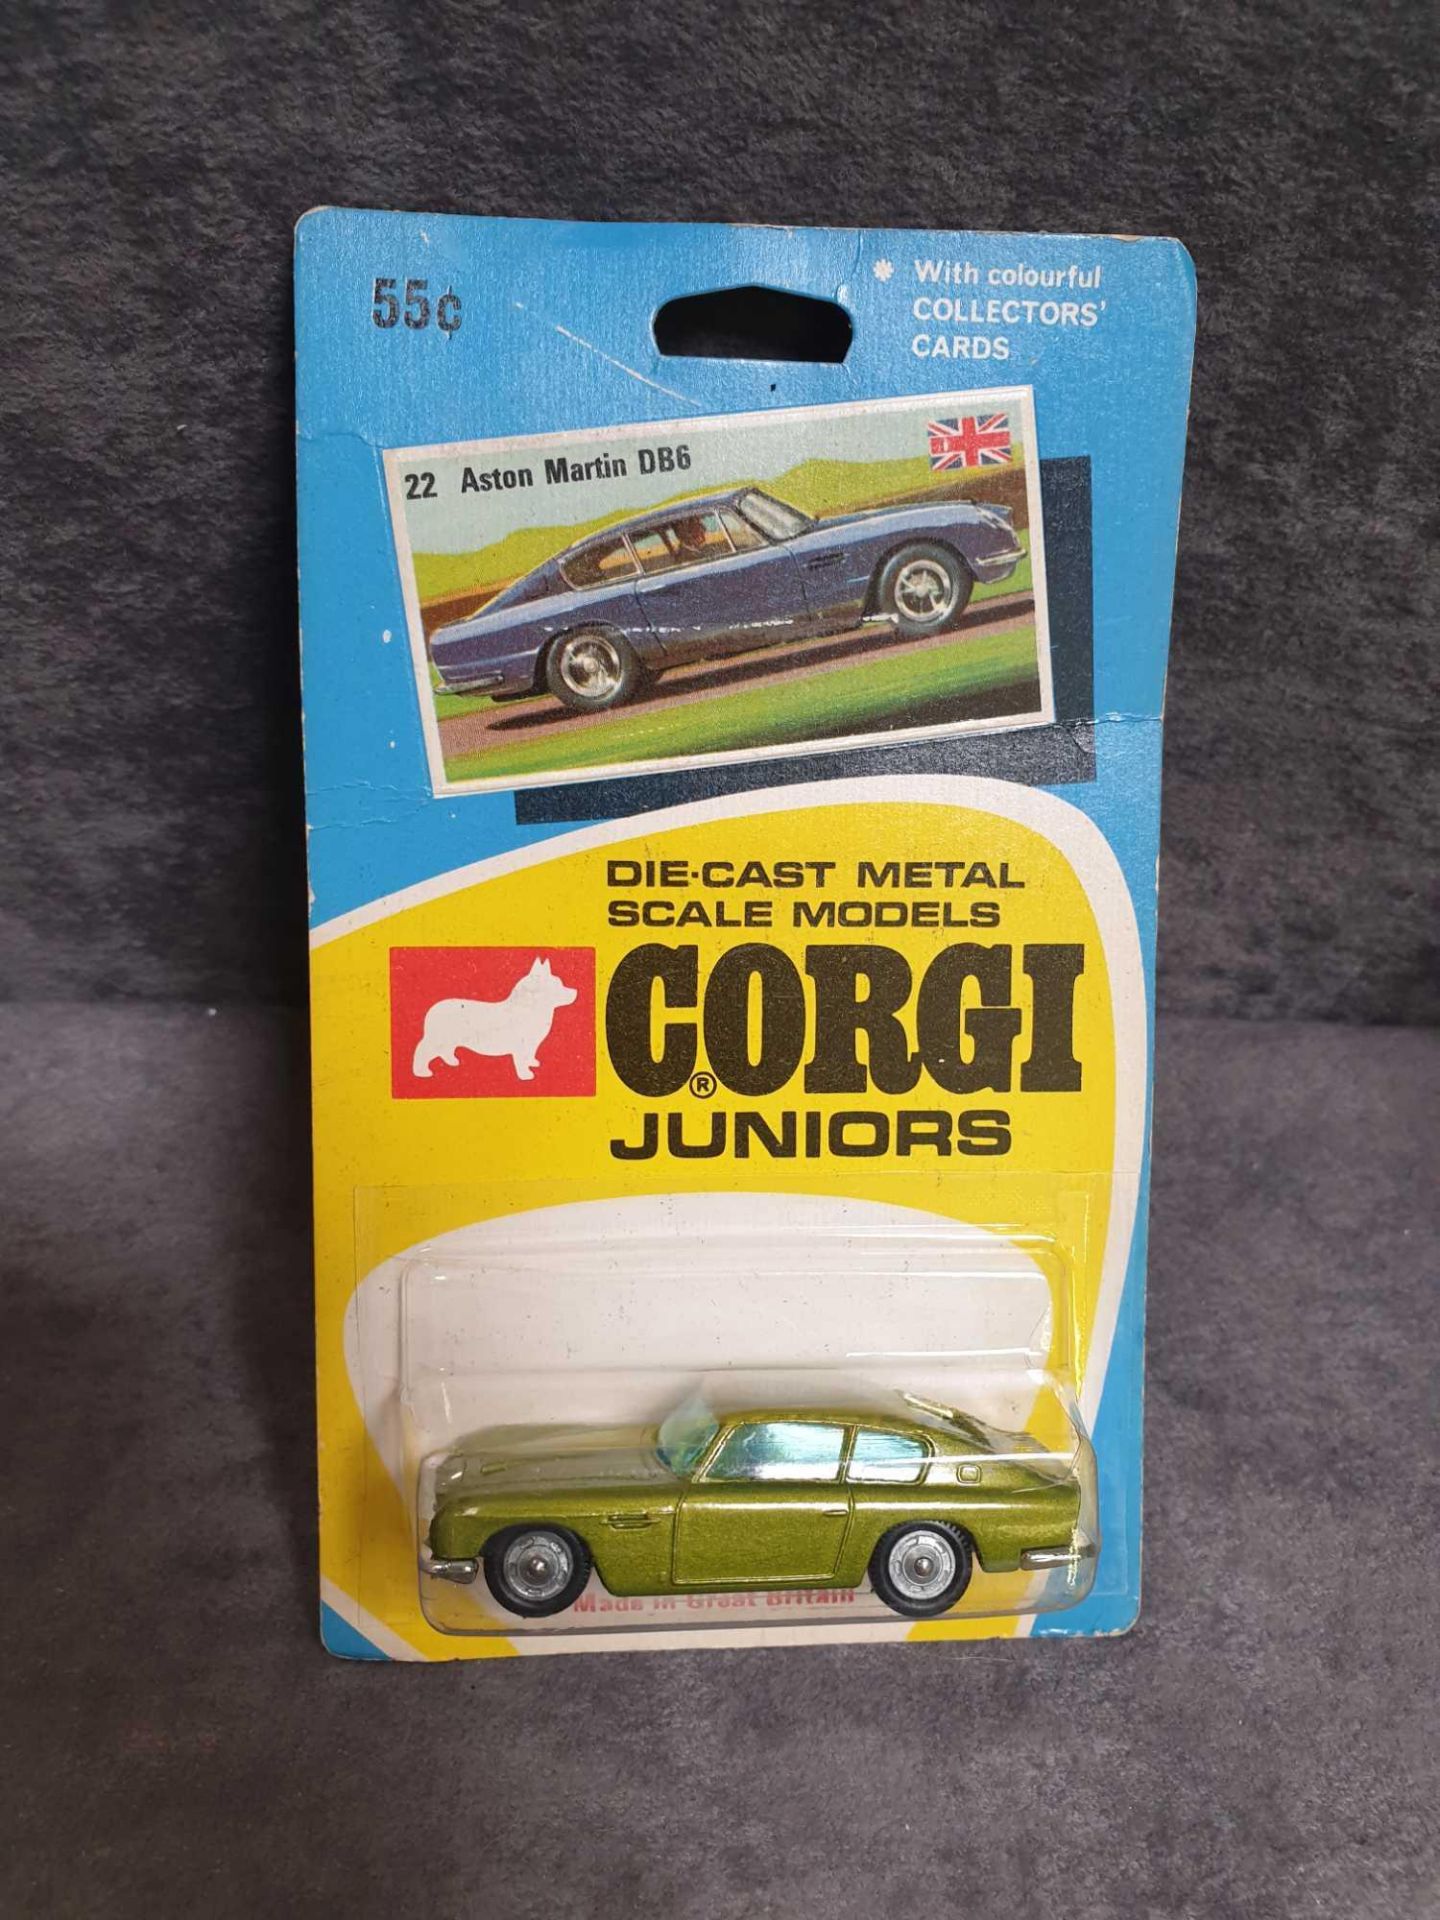 Mint Rarer Colour Corgi Diecast Juniors Diecast Model #22 Aston Martin DB6 In Rarer Metallic Green